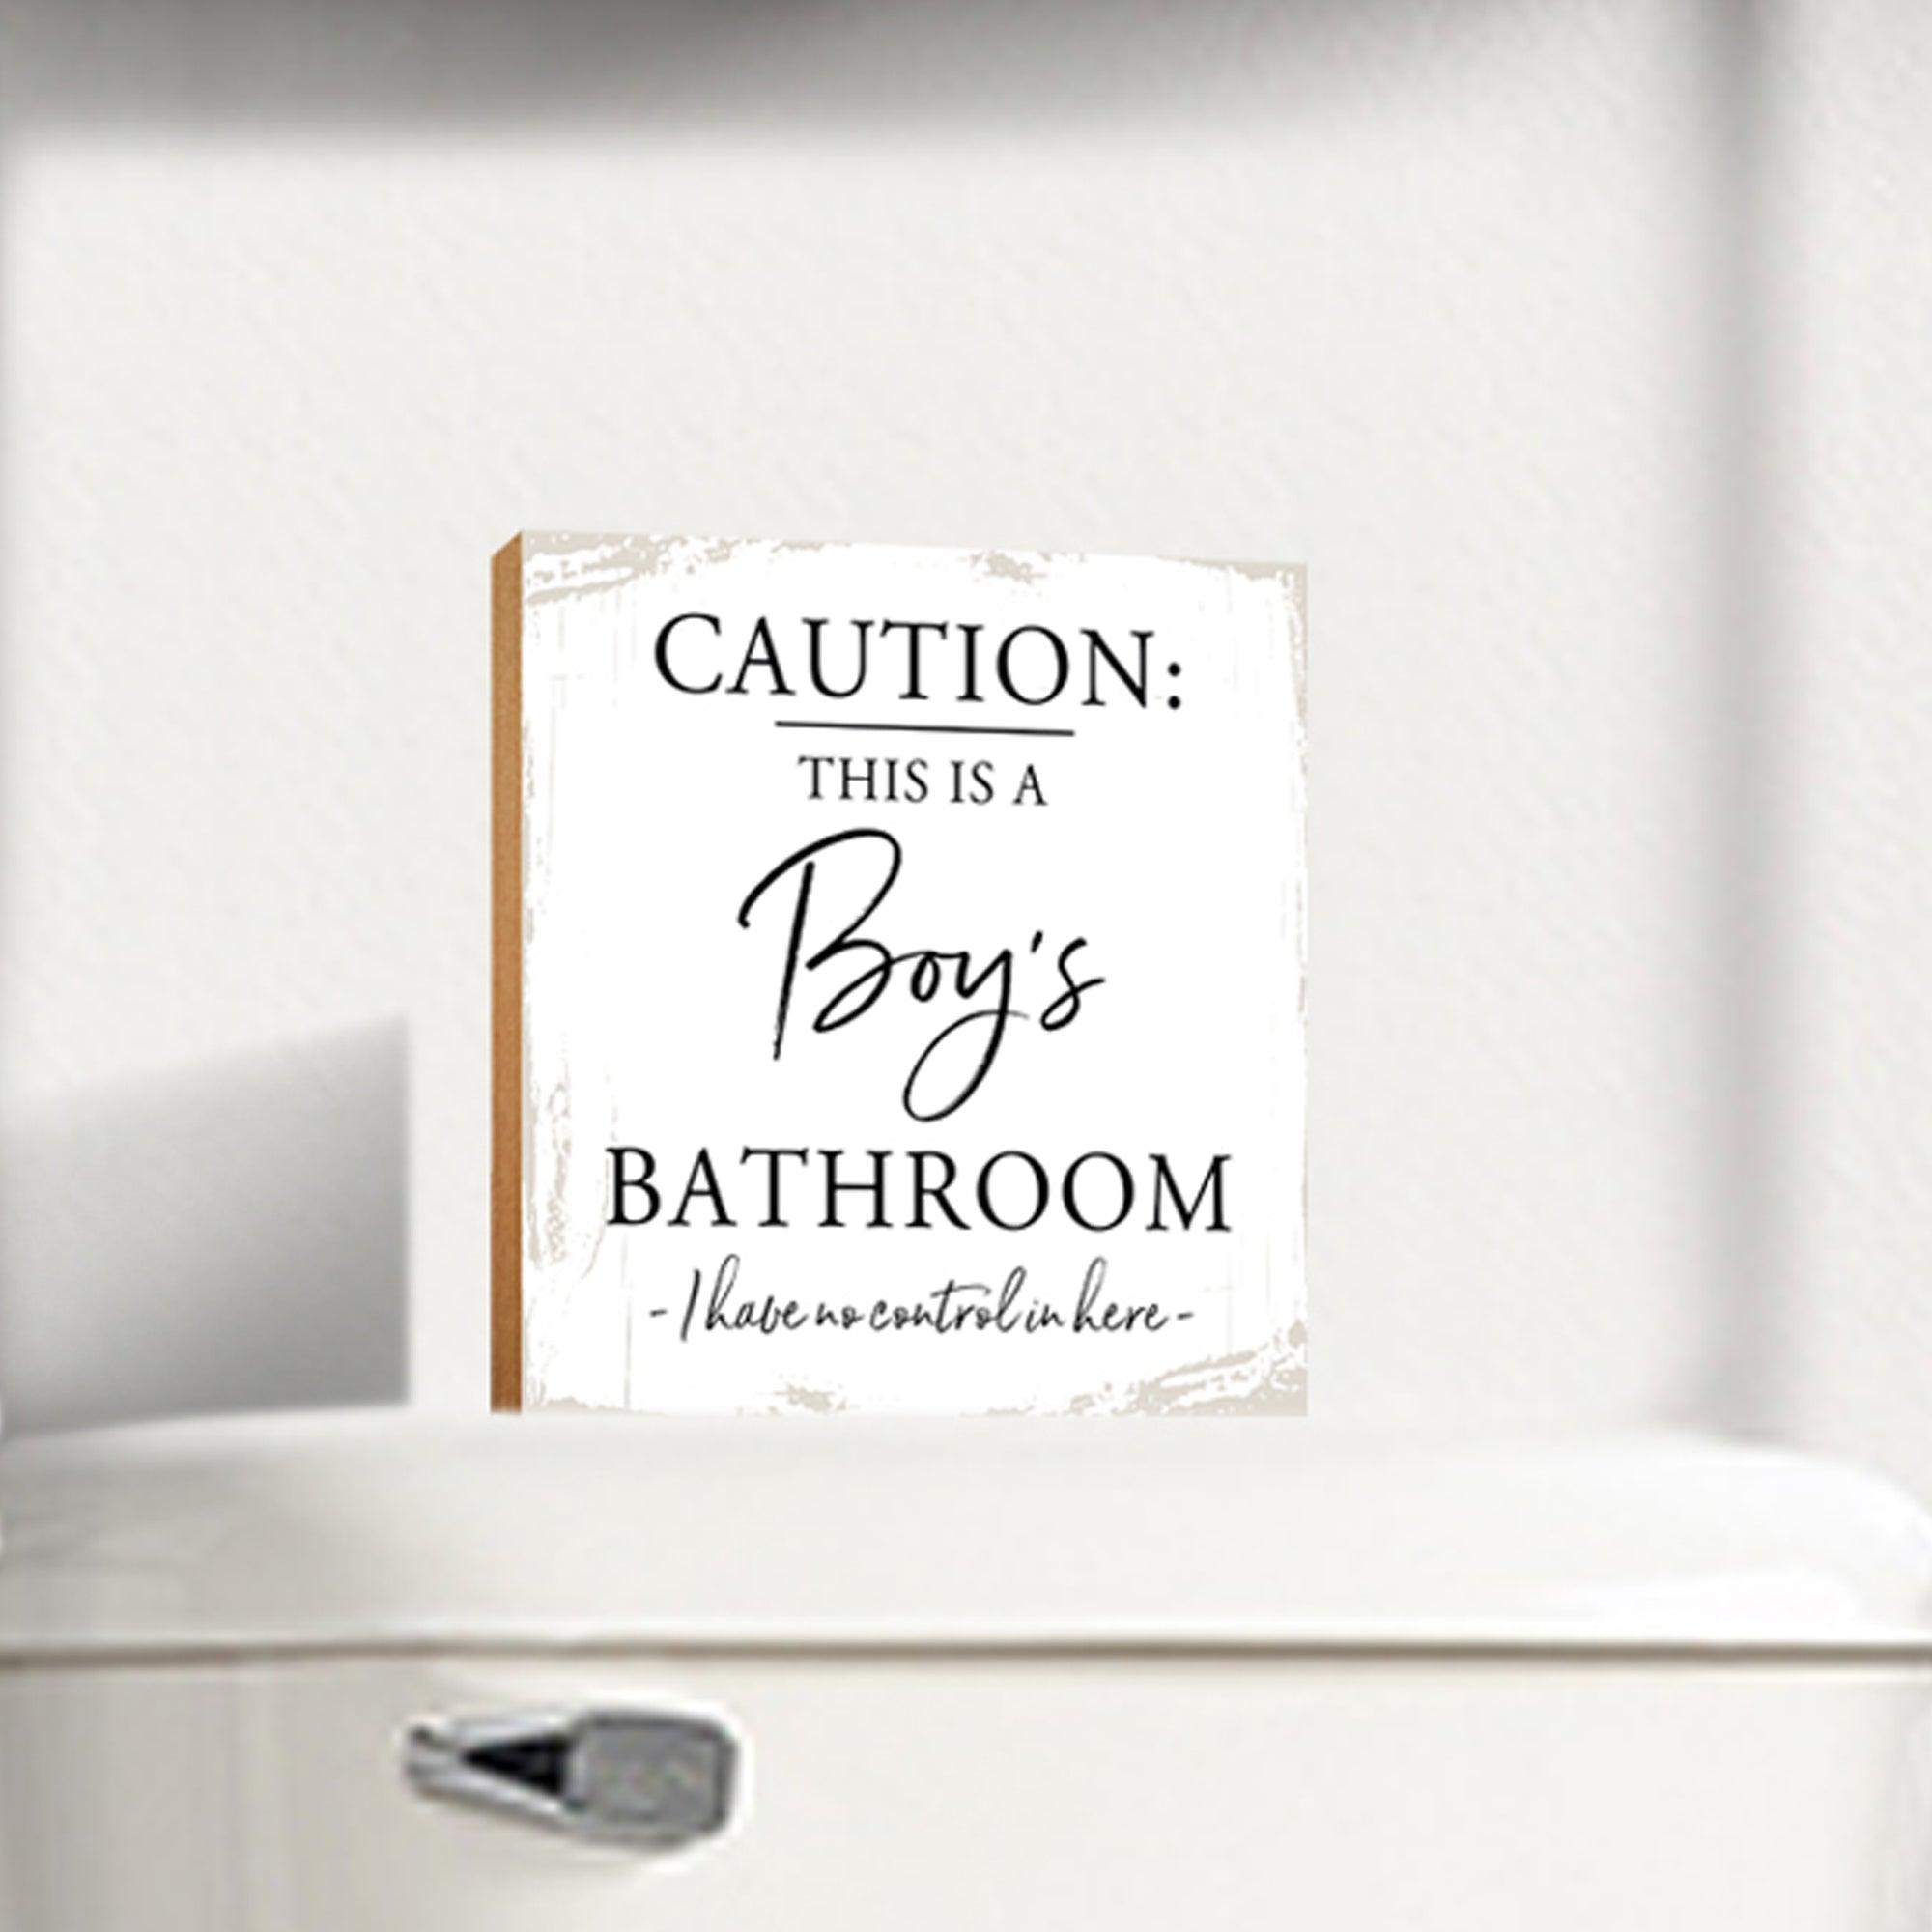 Wooden BATHROOM 6x6 Block shelf decor (Caution Boys Bathroom) Inspirational Plaque Tabletop and Family Home Decoration